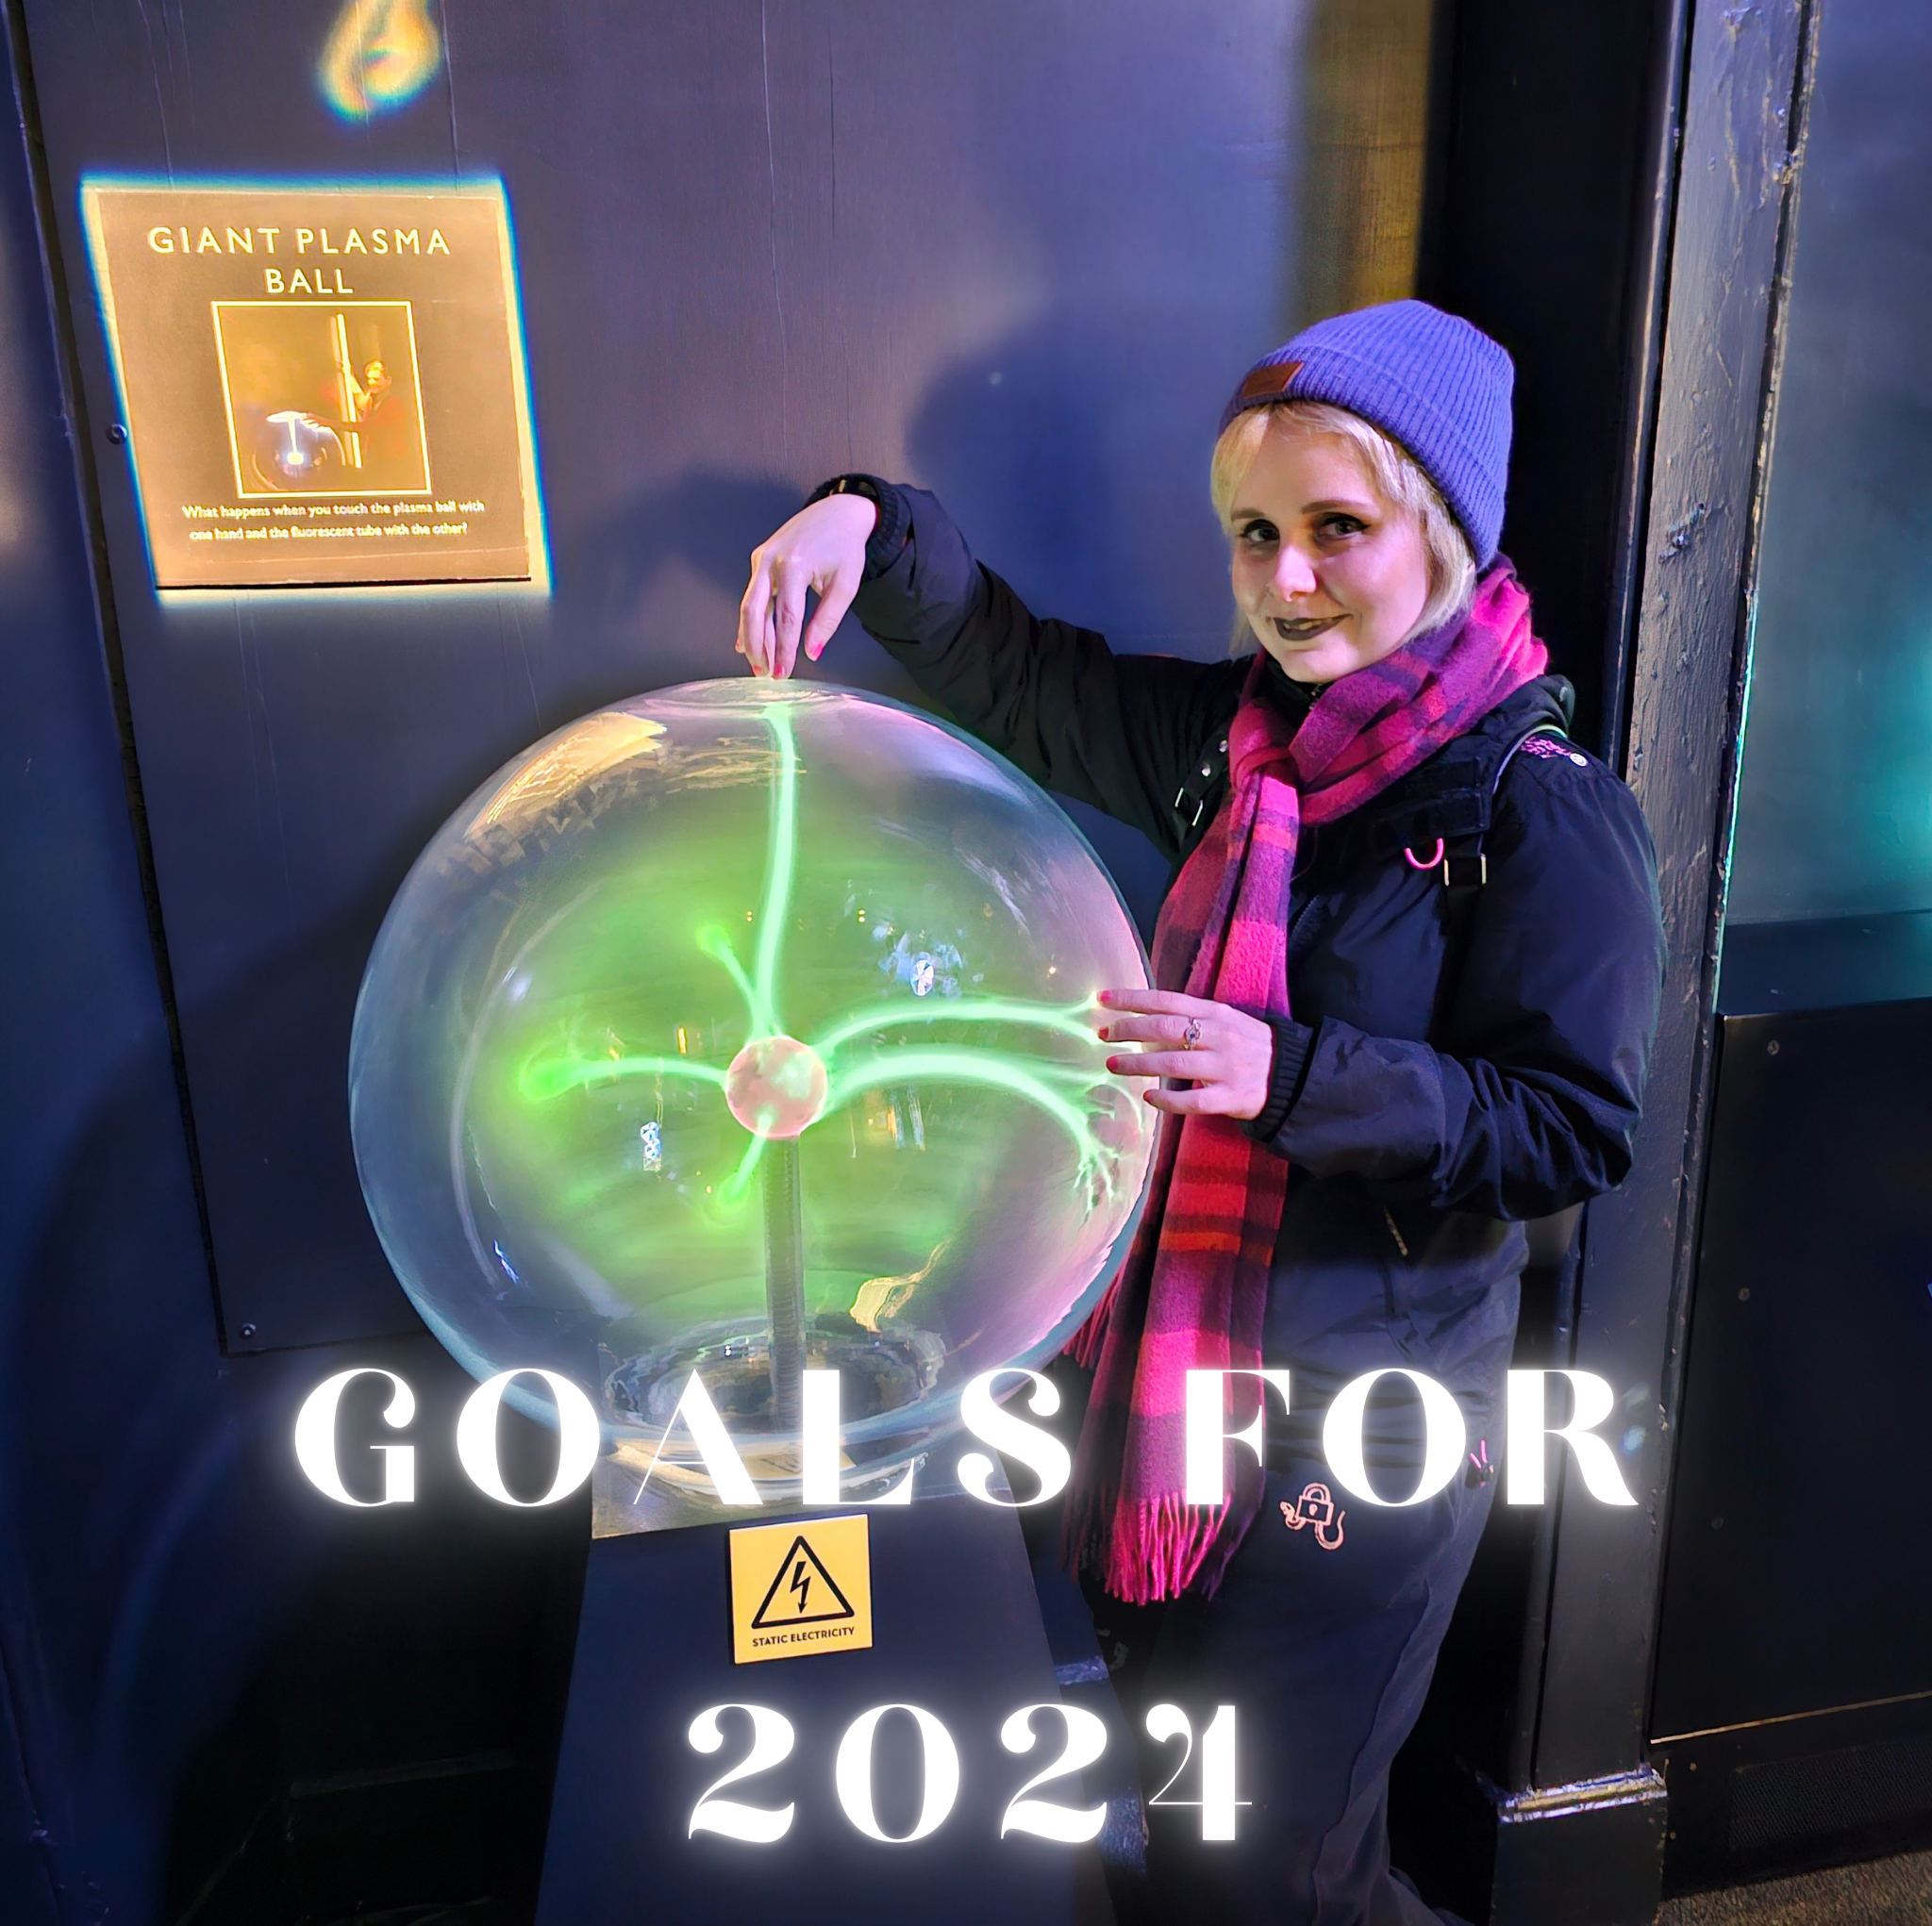 2024 goals